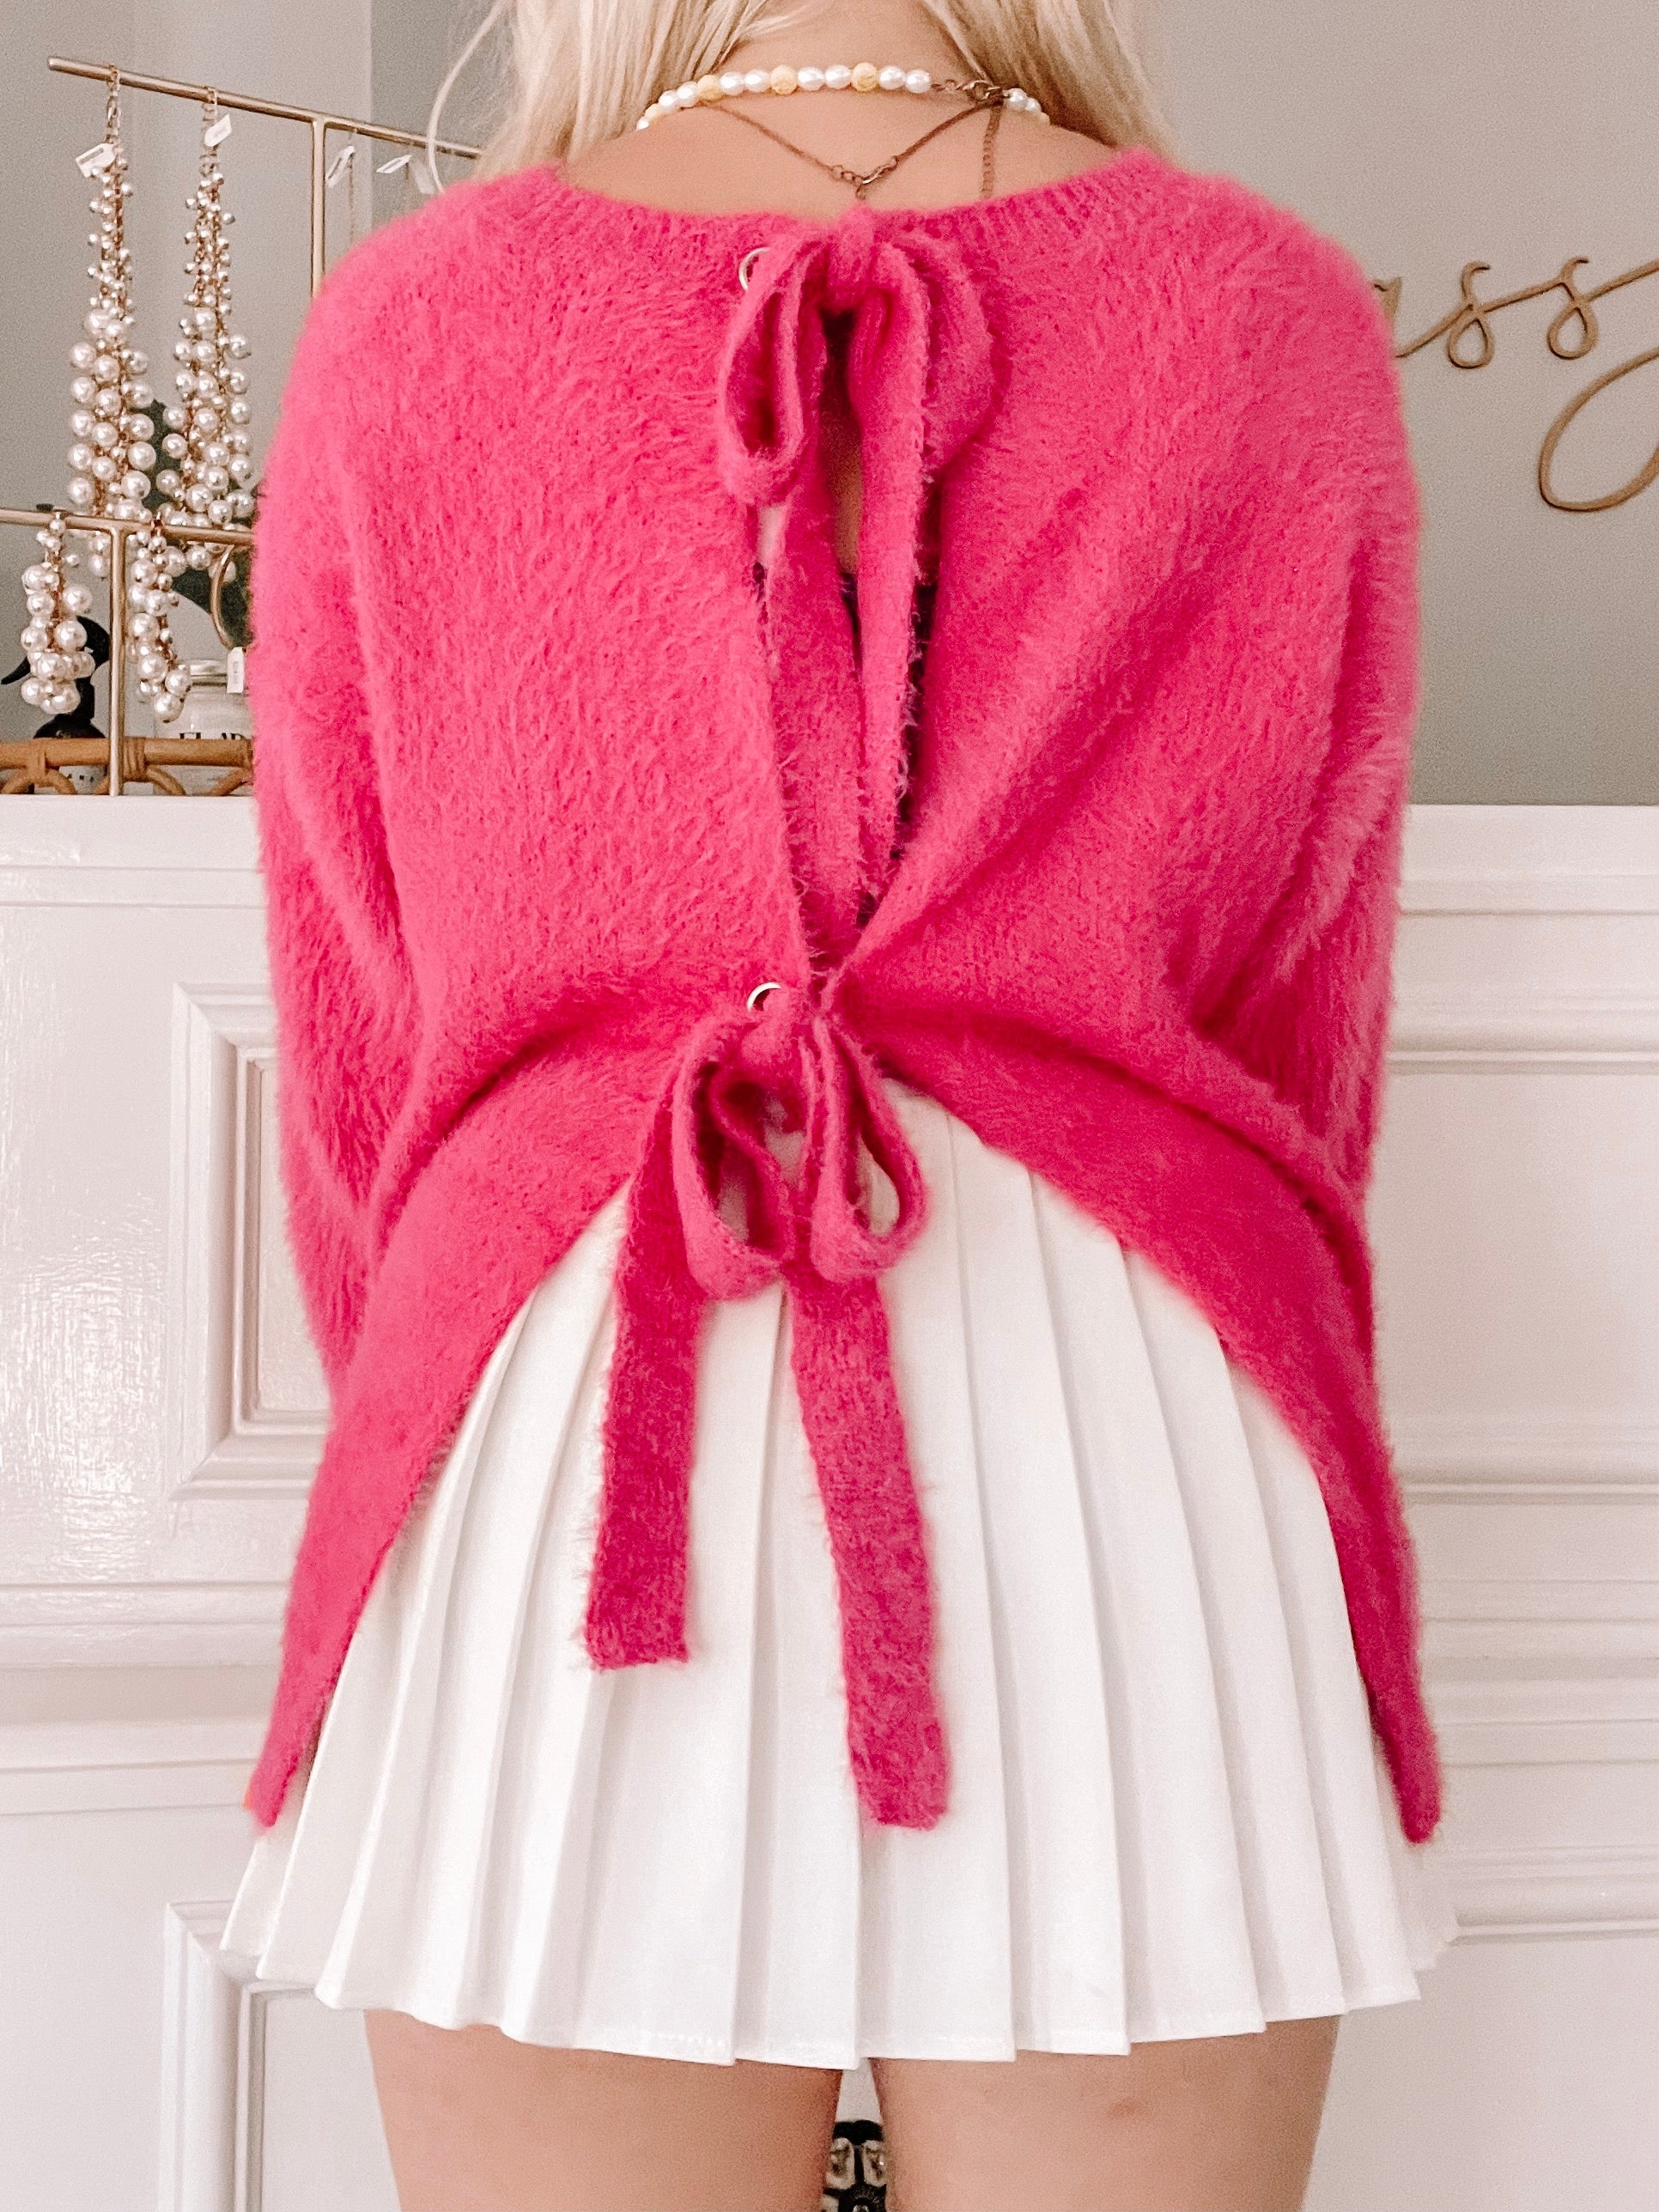 Cheeky Bow Hot Pink Fuzzy Sweater | Sassy Shortcake | sassyshortcake.com